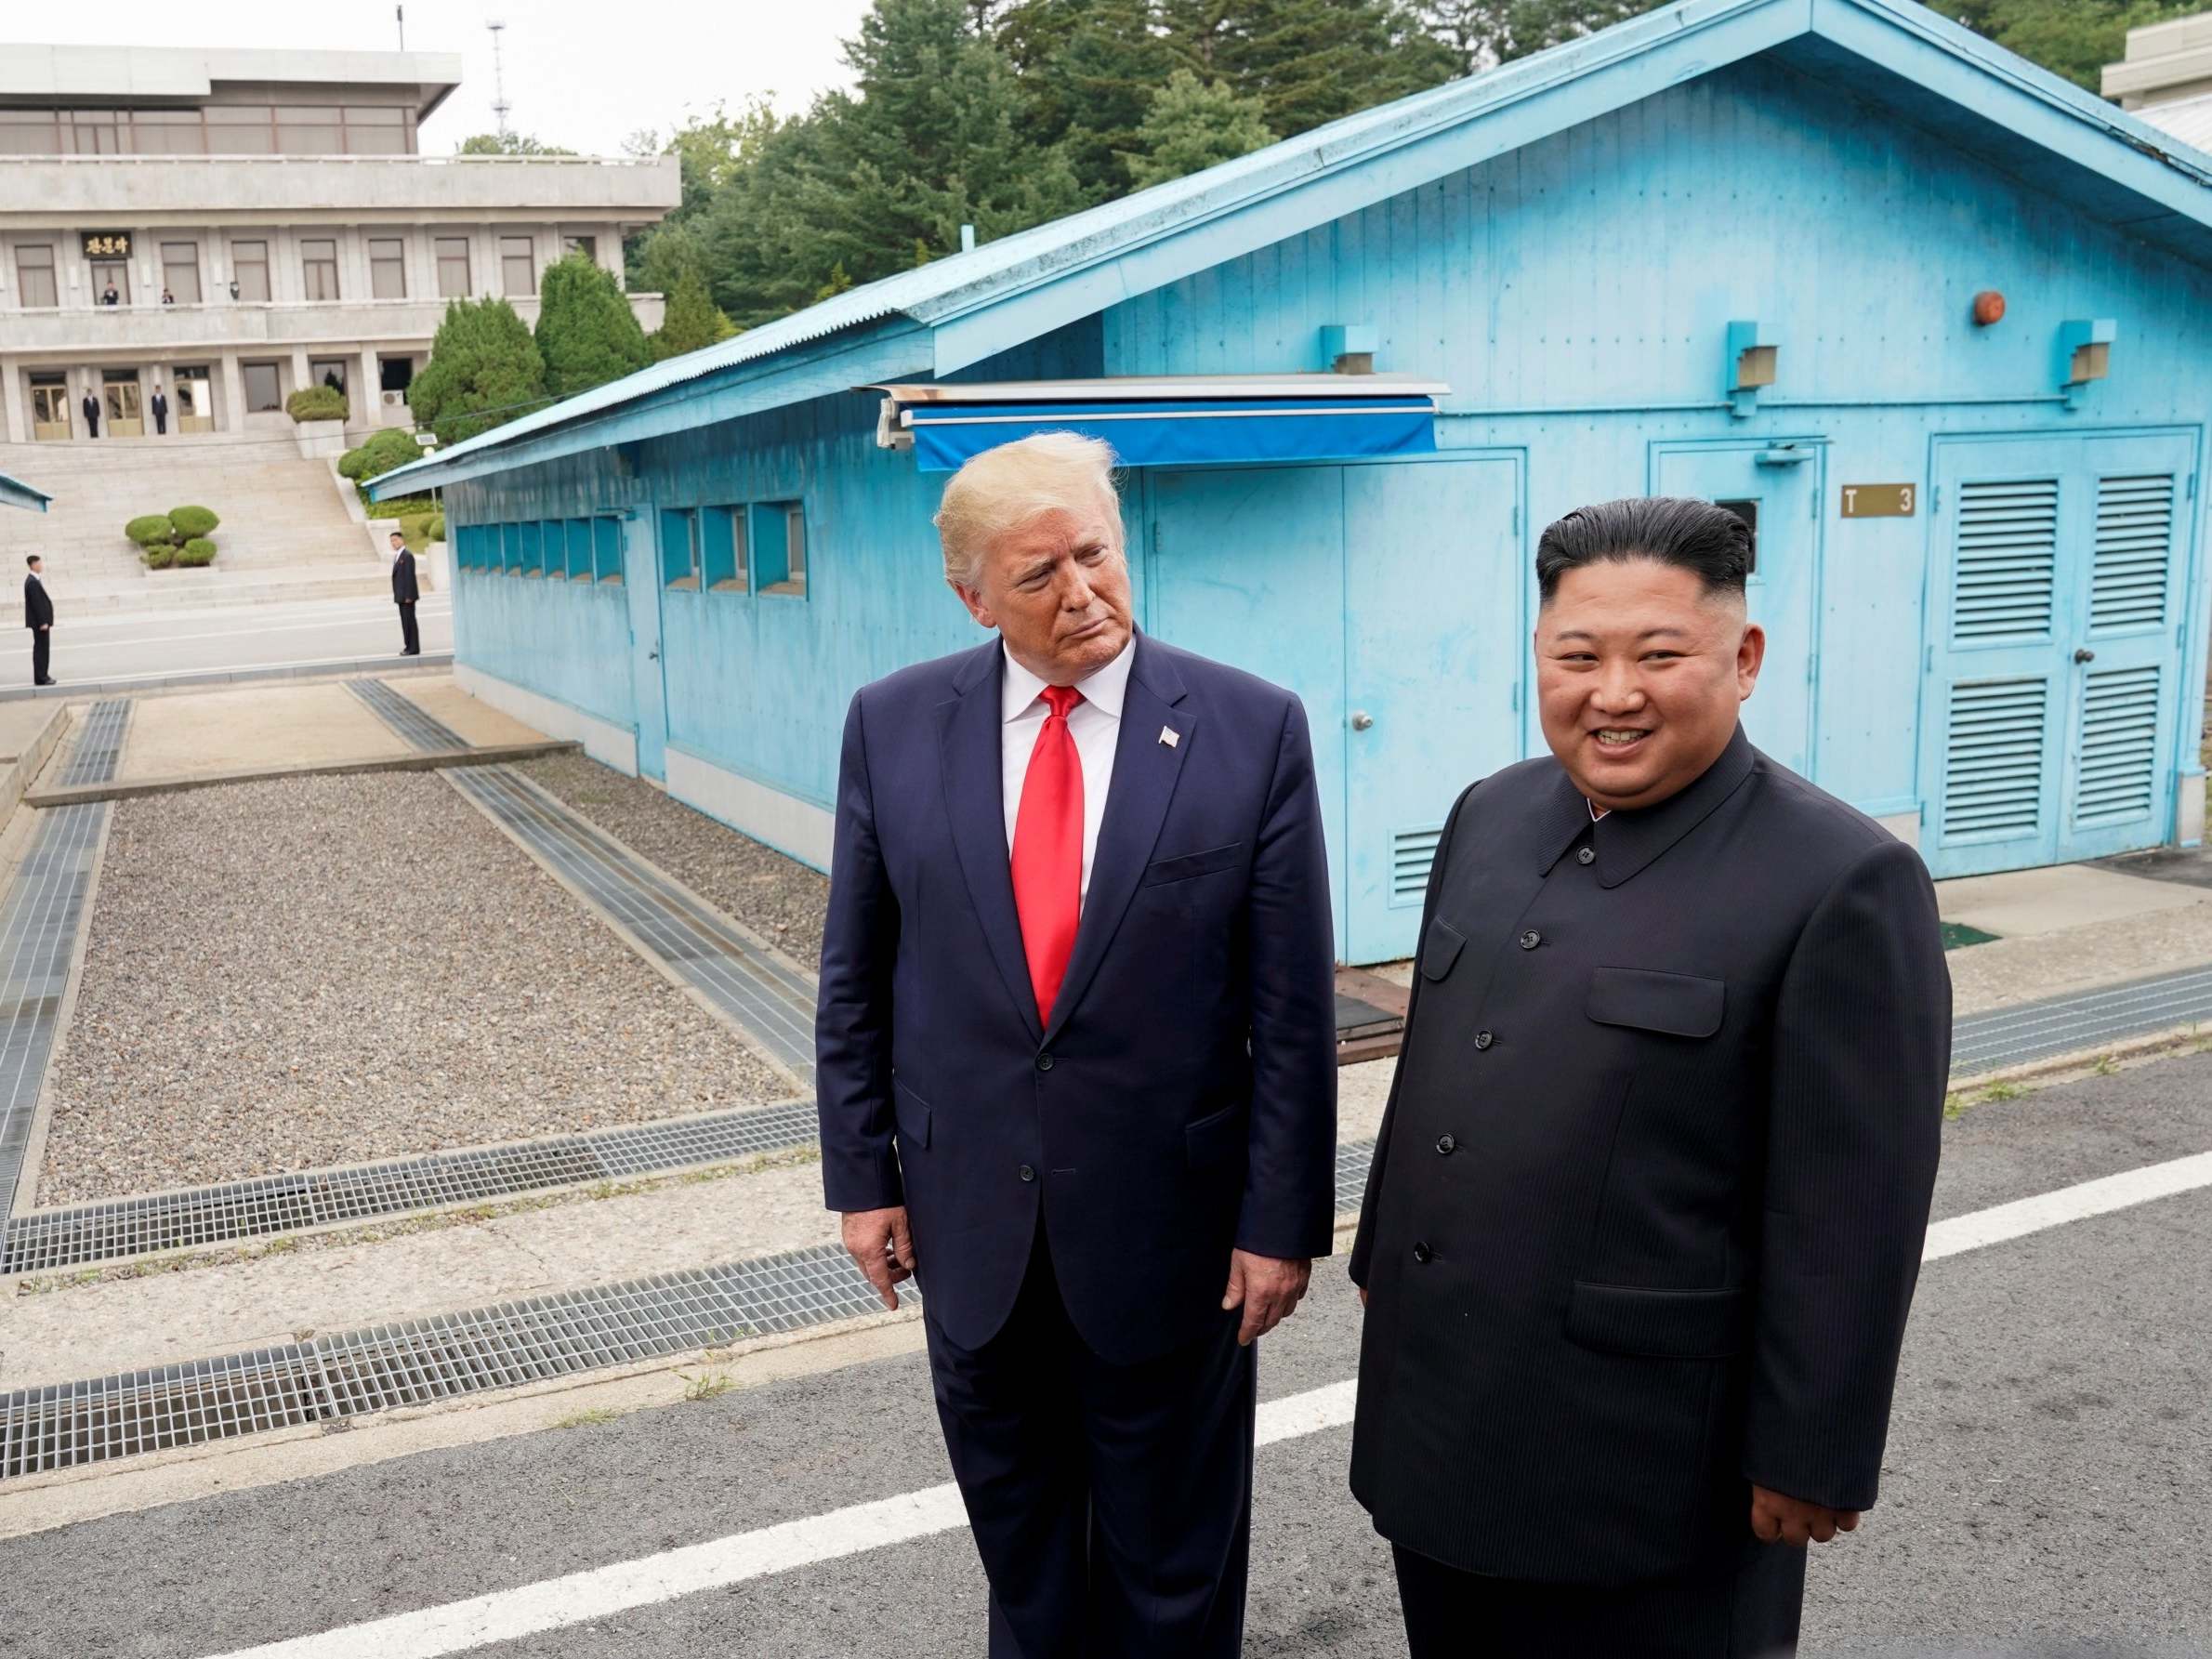 File image of US president Donald Trump meeting North Korean leader Kim Jong Un.